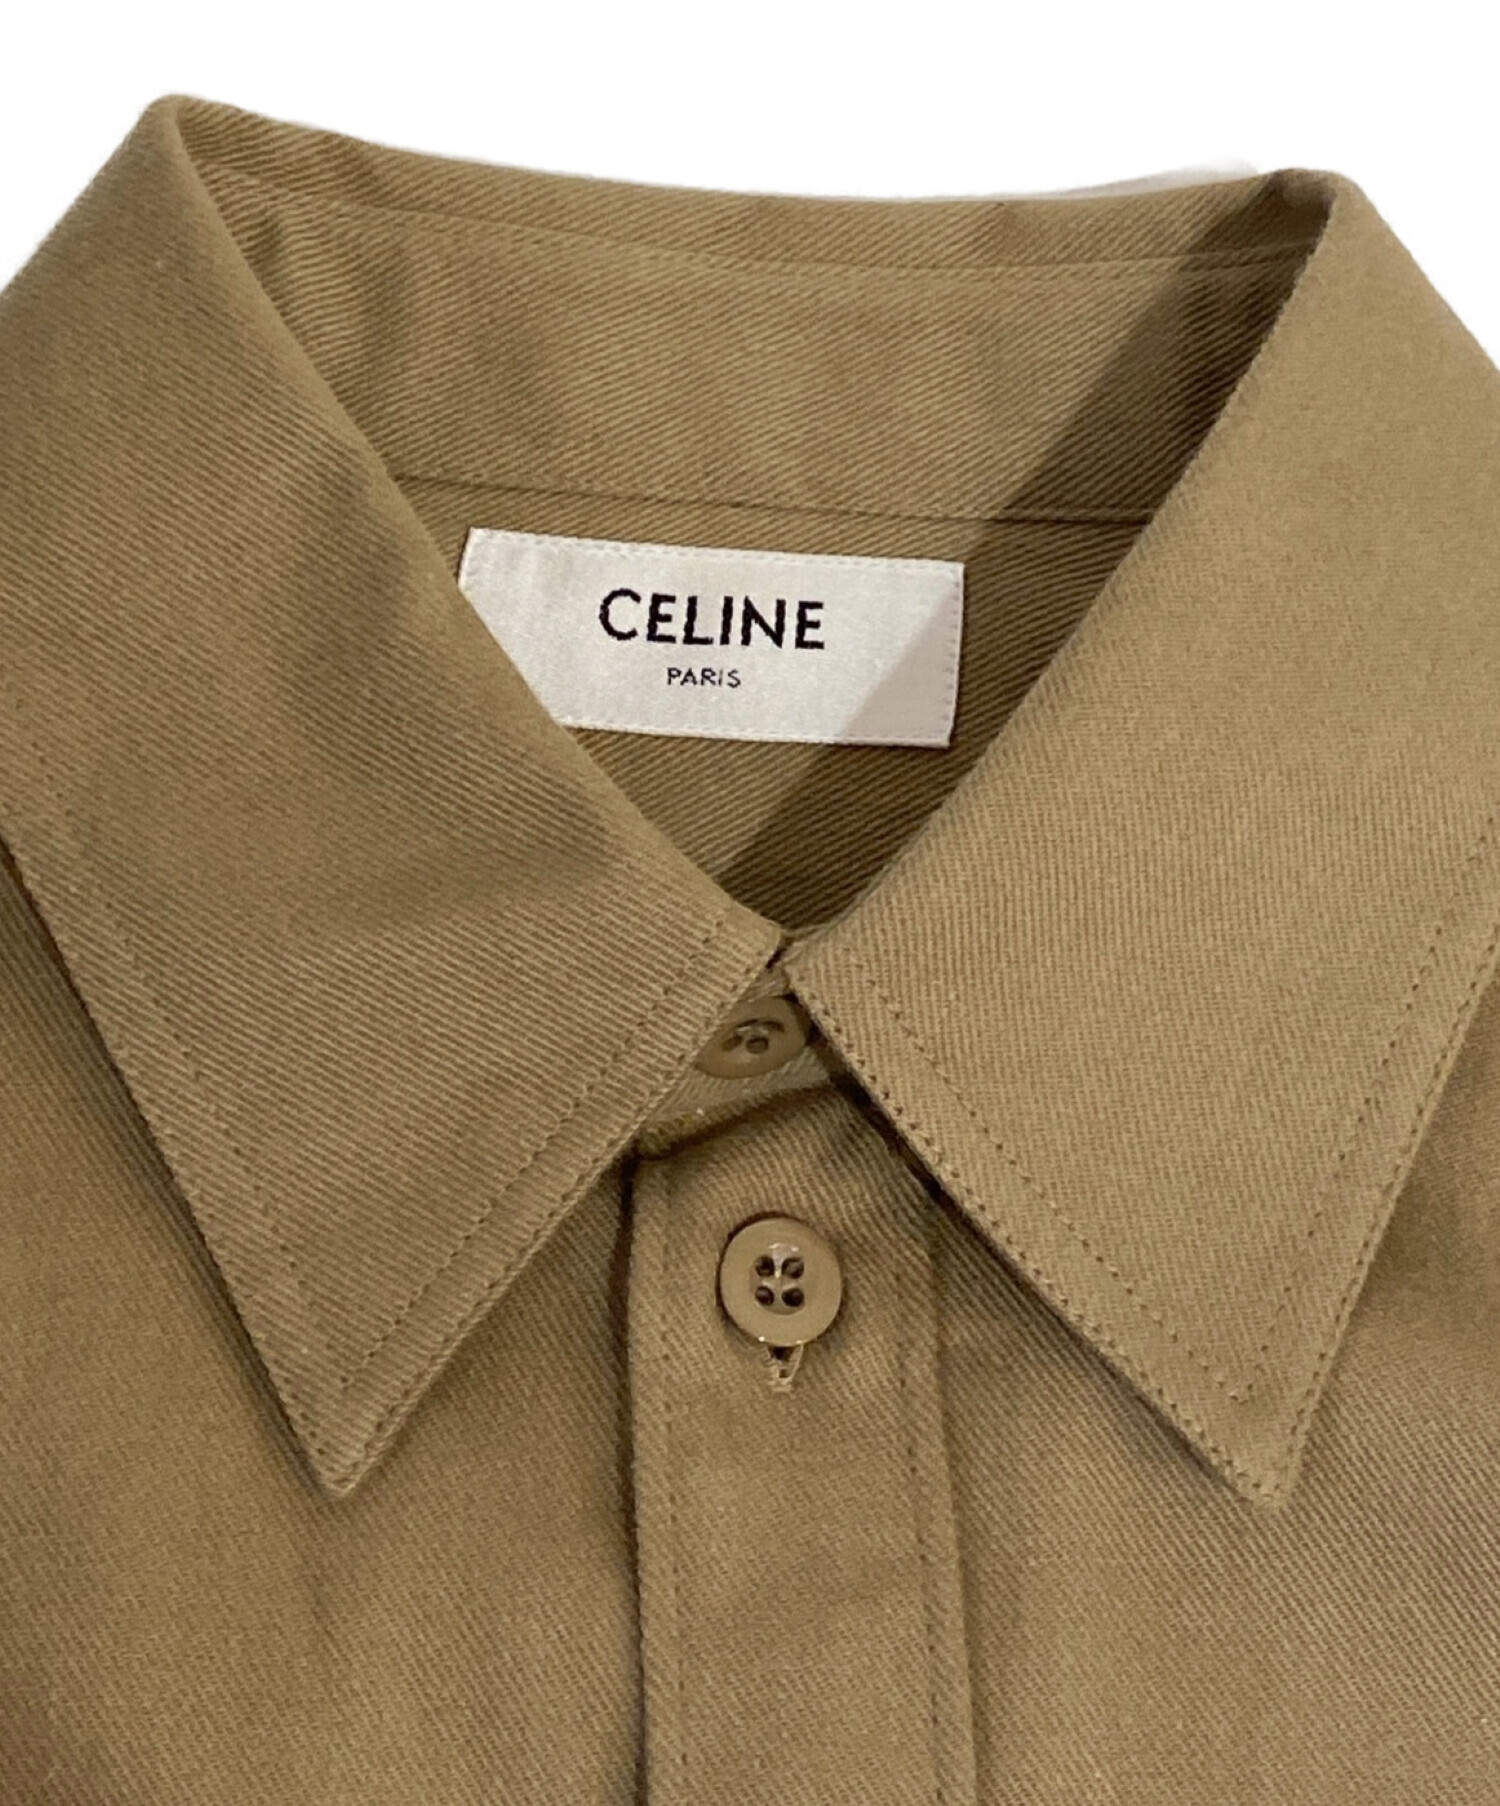 CELINE (セリーヌ) コットンツイルミリタリーシャツ カーキ サイズ:S